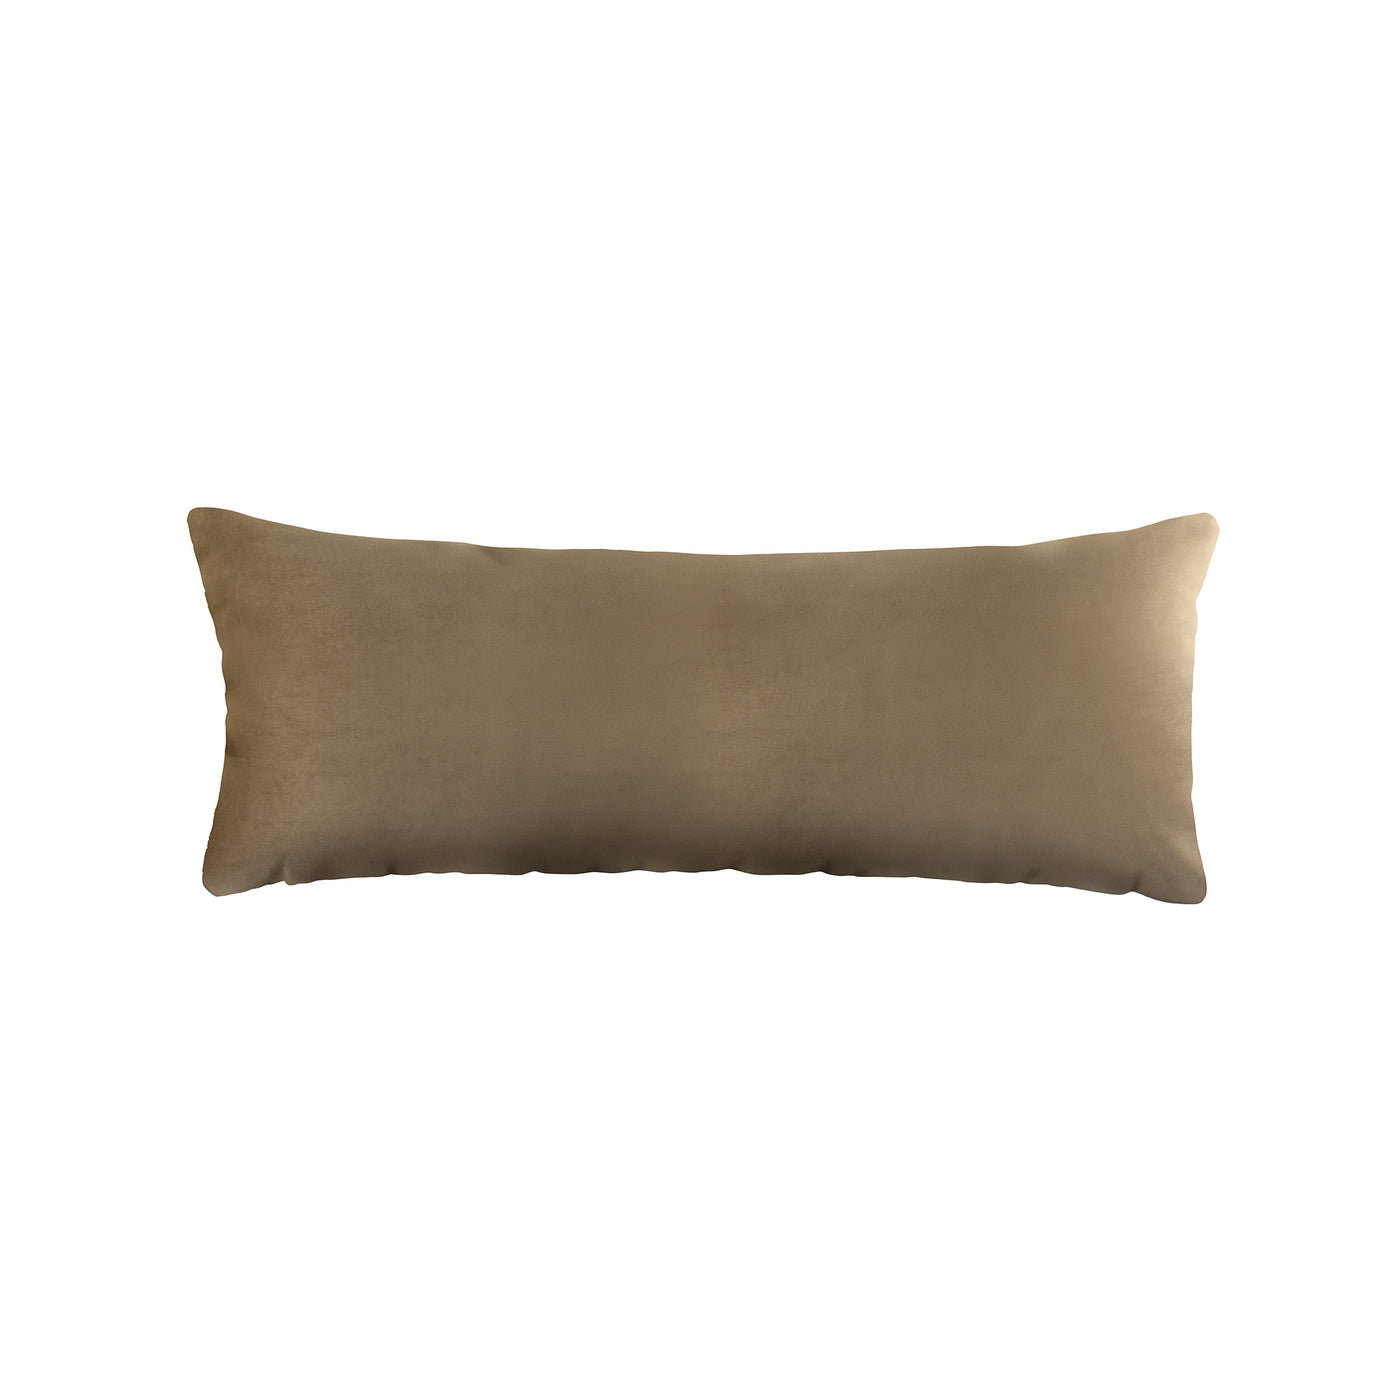 Vivid Beige Long Rectangle Pillow (18x46)